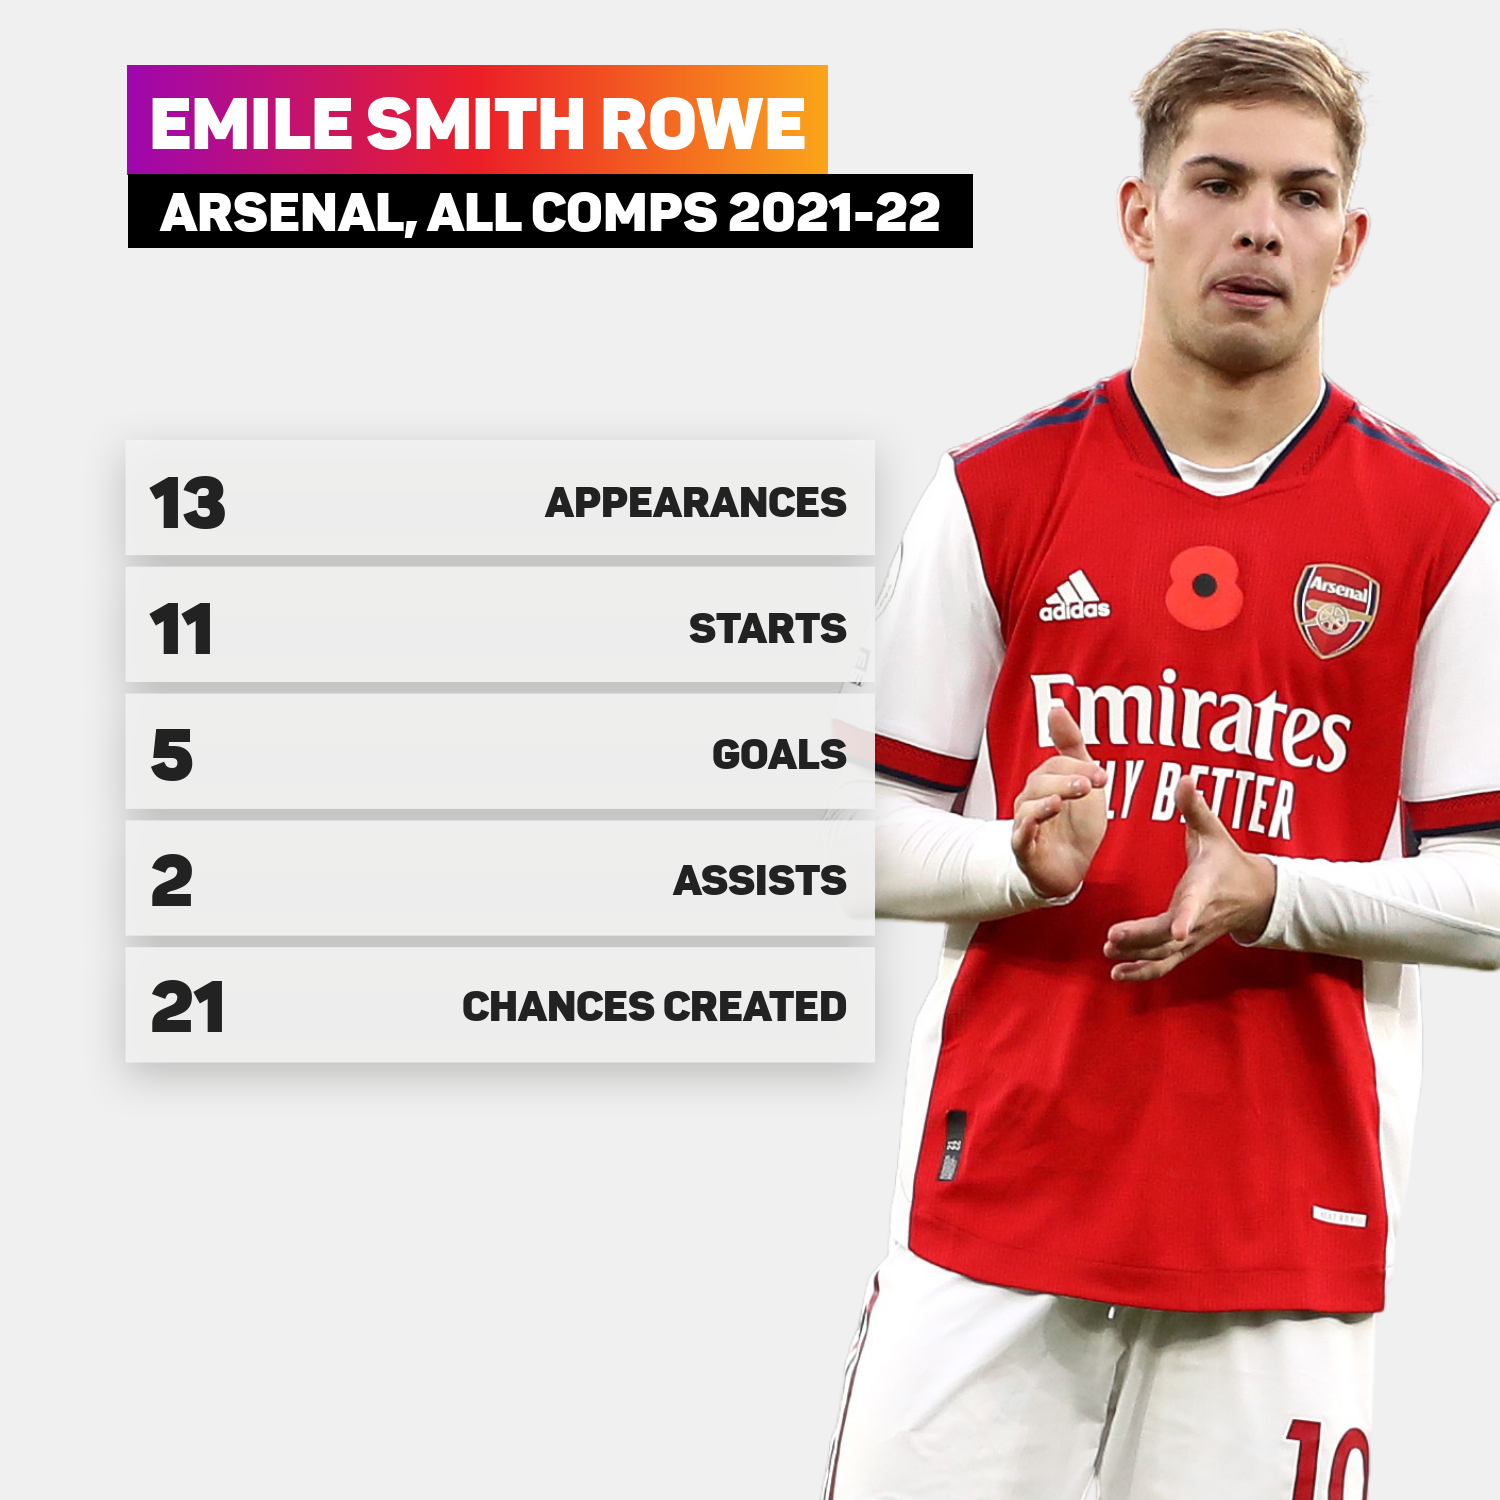 Emile Smith Rowe is enjoying a fine season